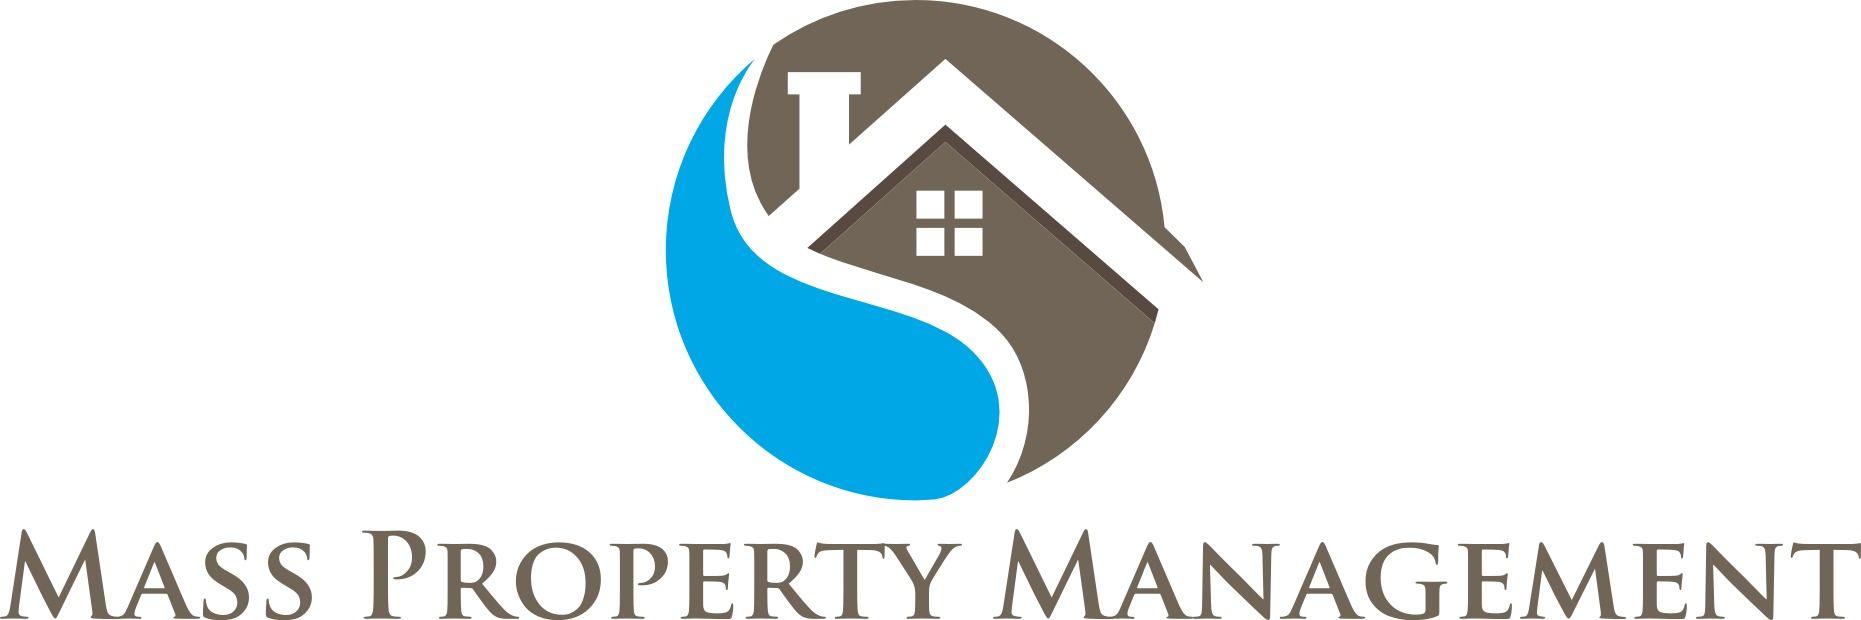 Property Management Company Logo - Property management Logos